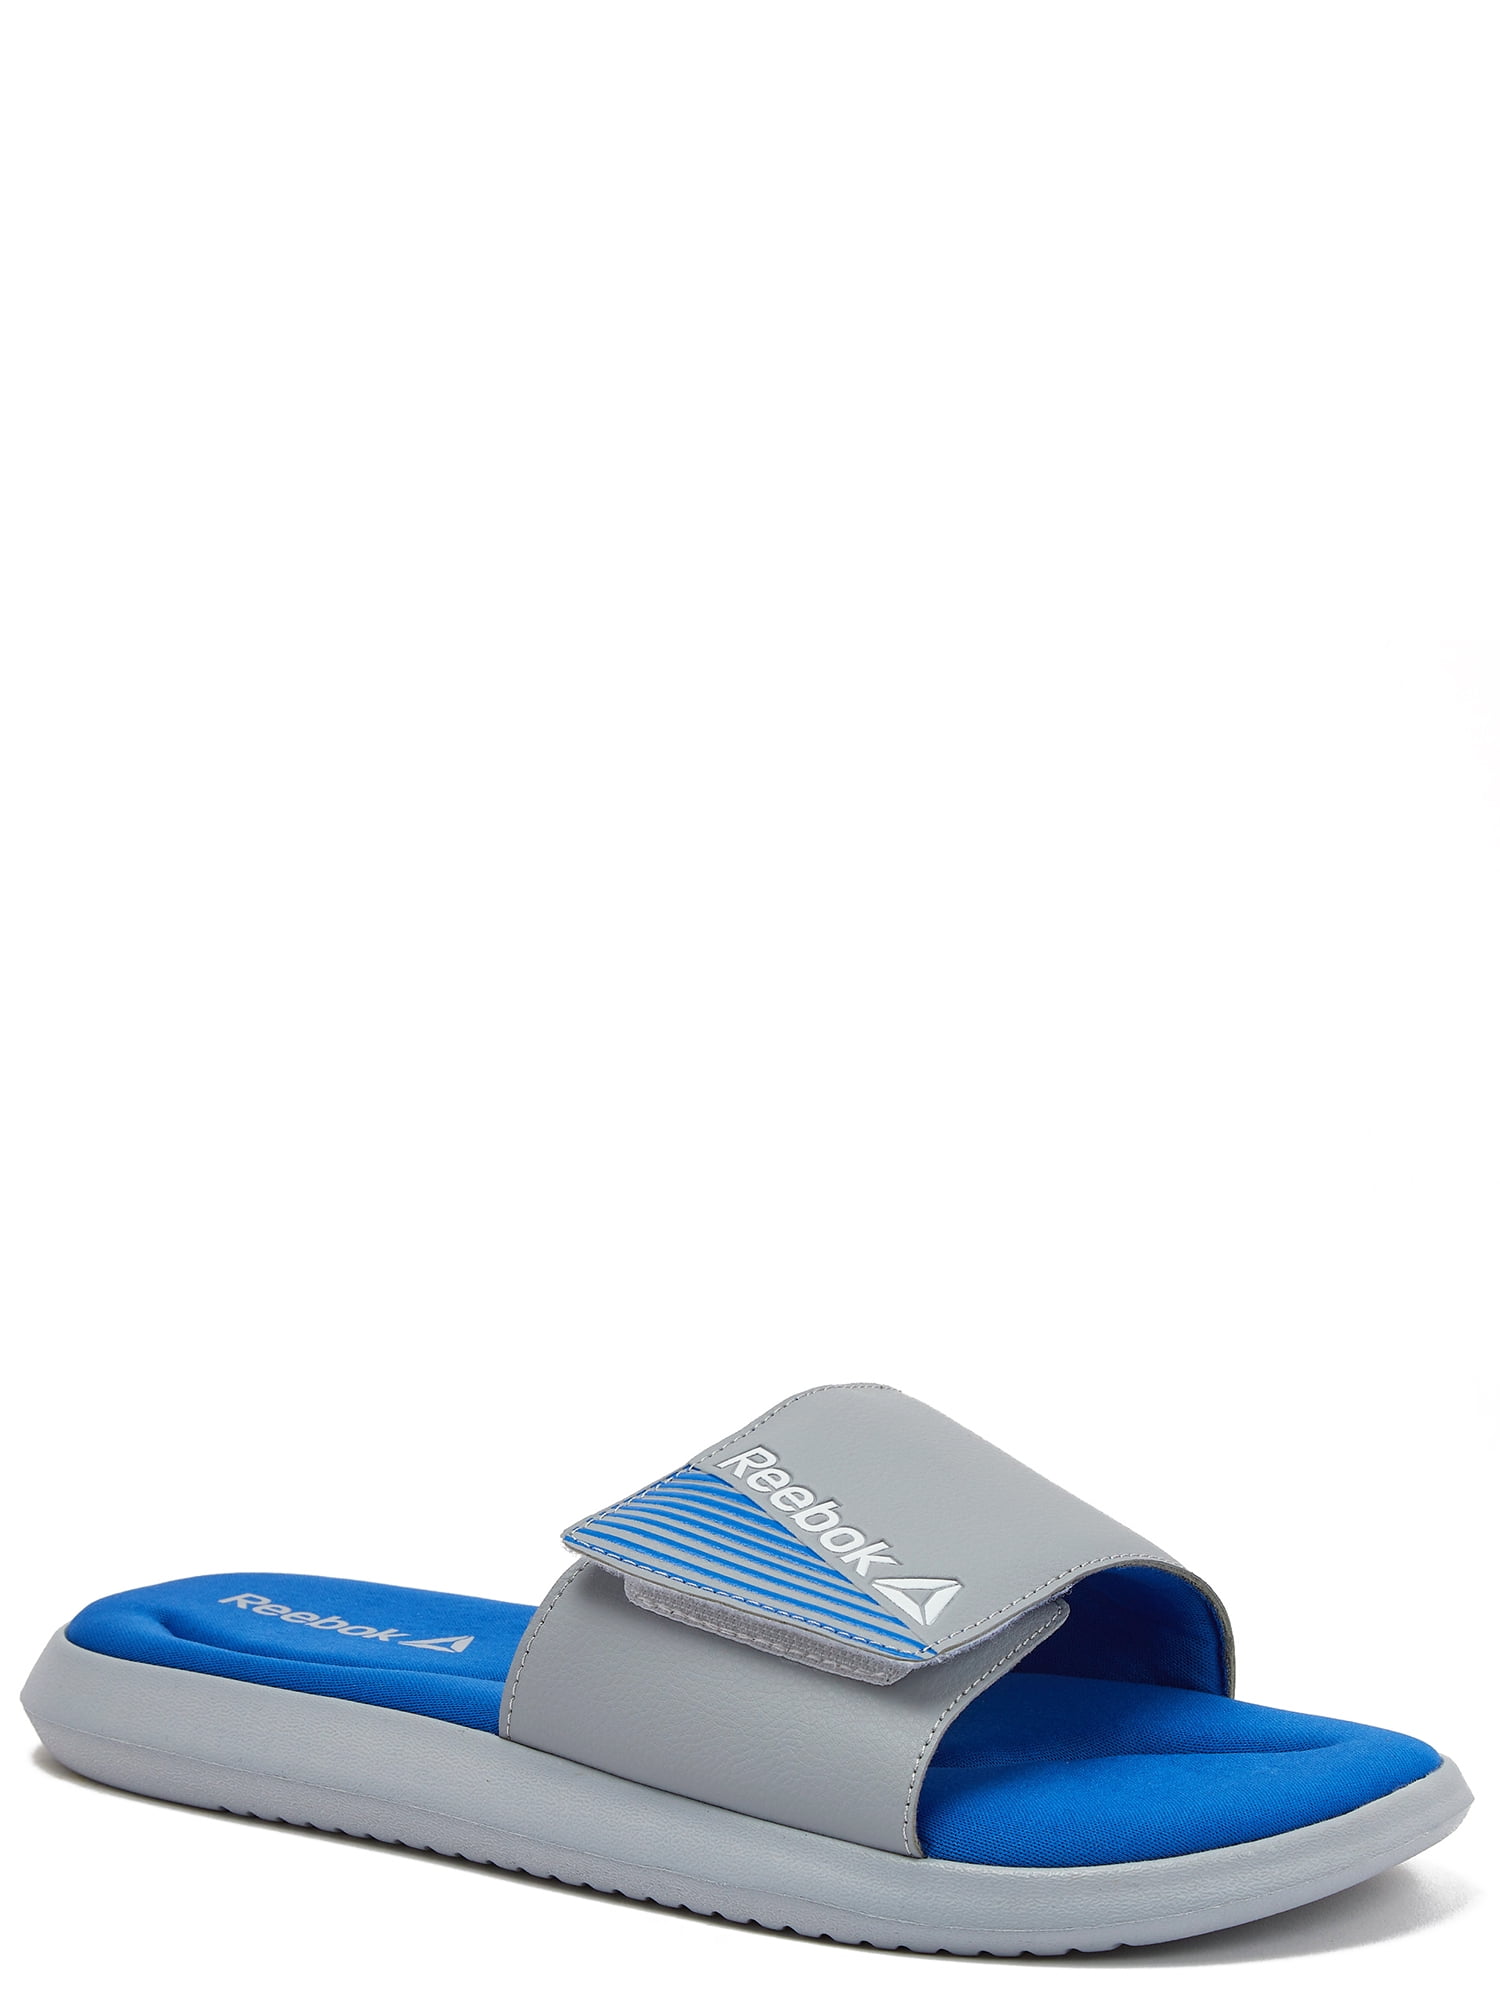 champán sarcoma tambor Reebok Adult Men's Memory Foam Slide Sandals with Adjustable Strap -  Walmart.com